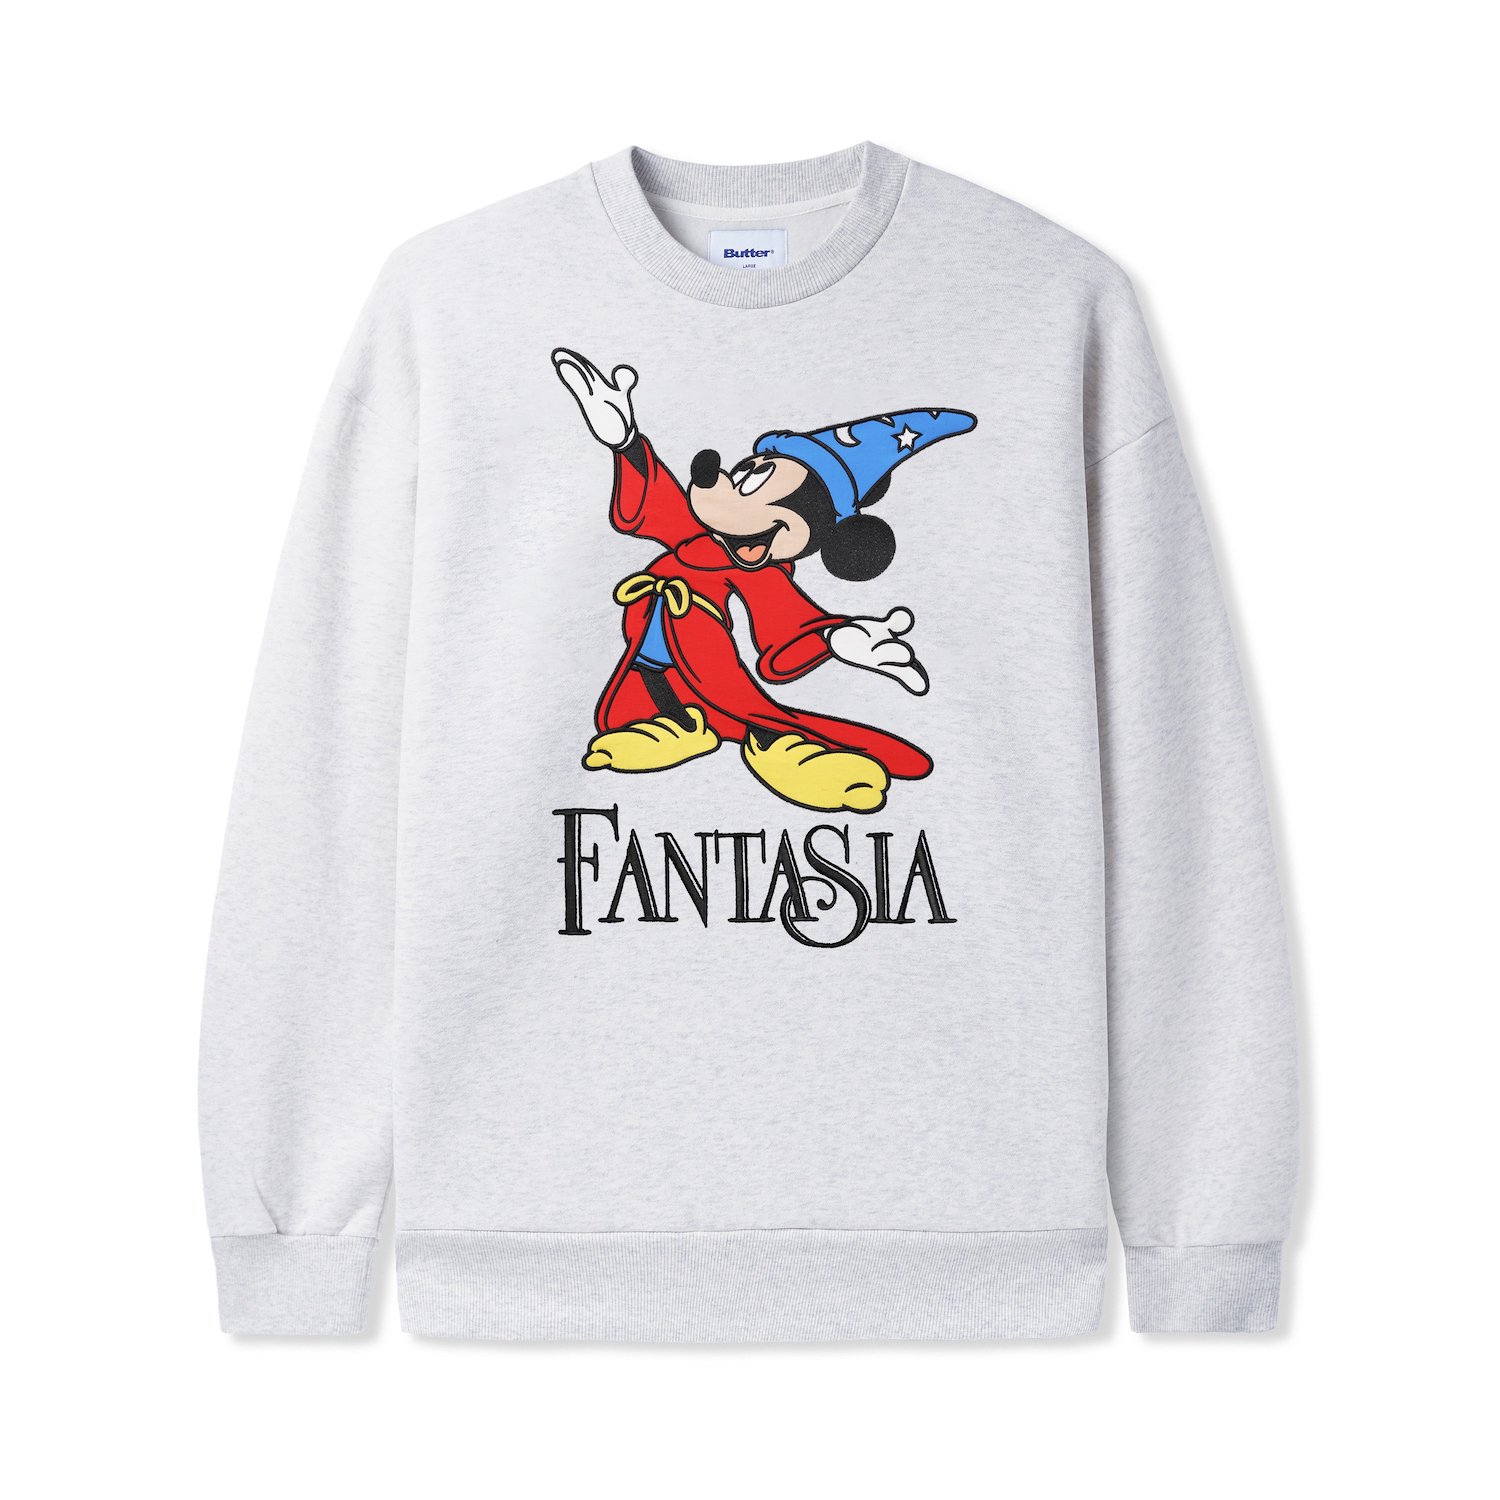 BUTTER GOODS × DISNEY<br>Fantasia Crewneck Sweatshirt<br>